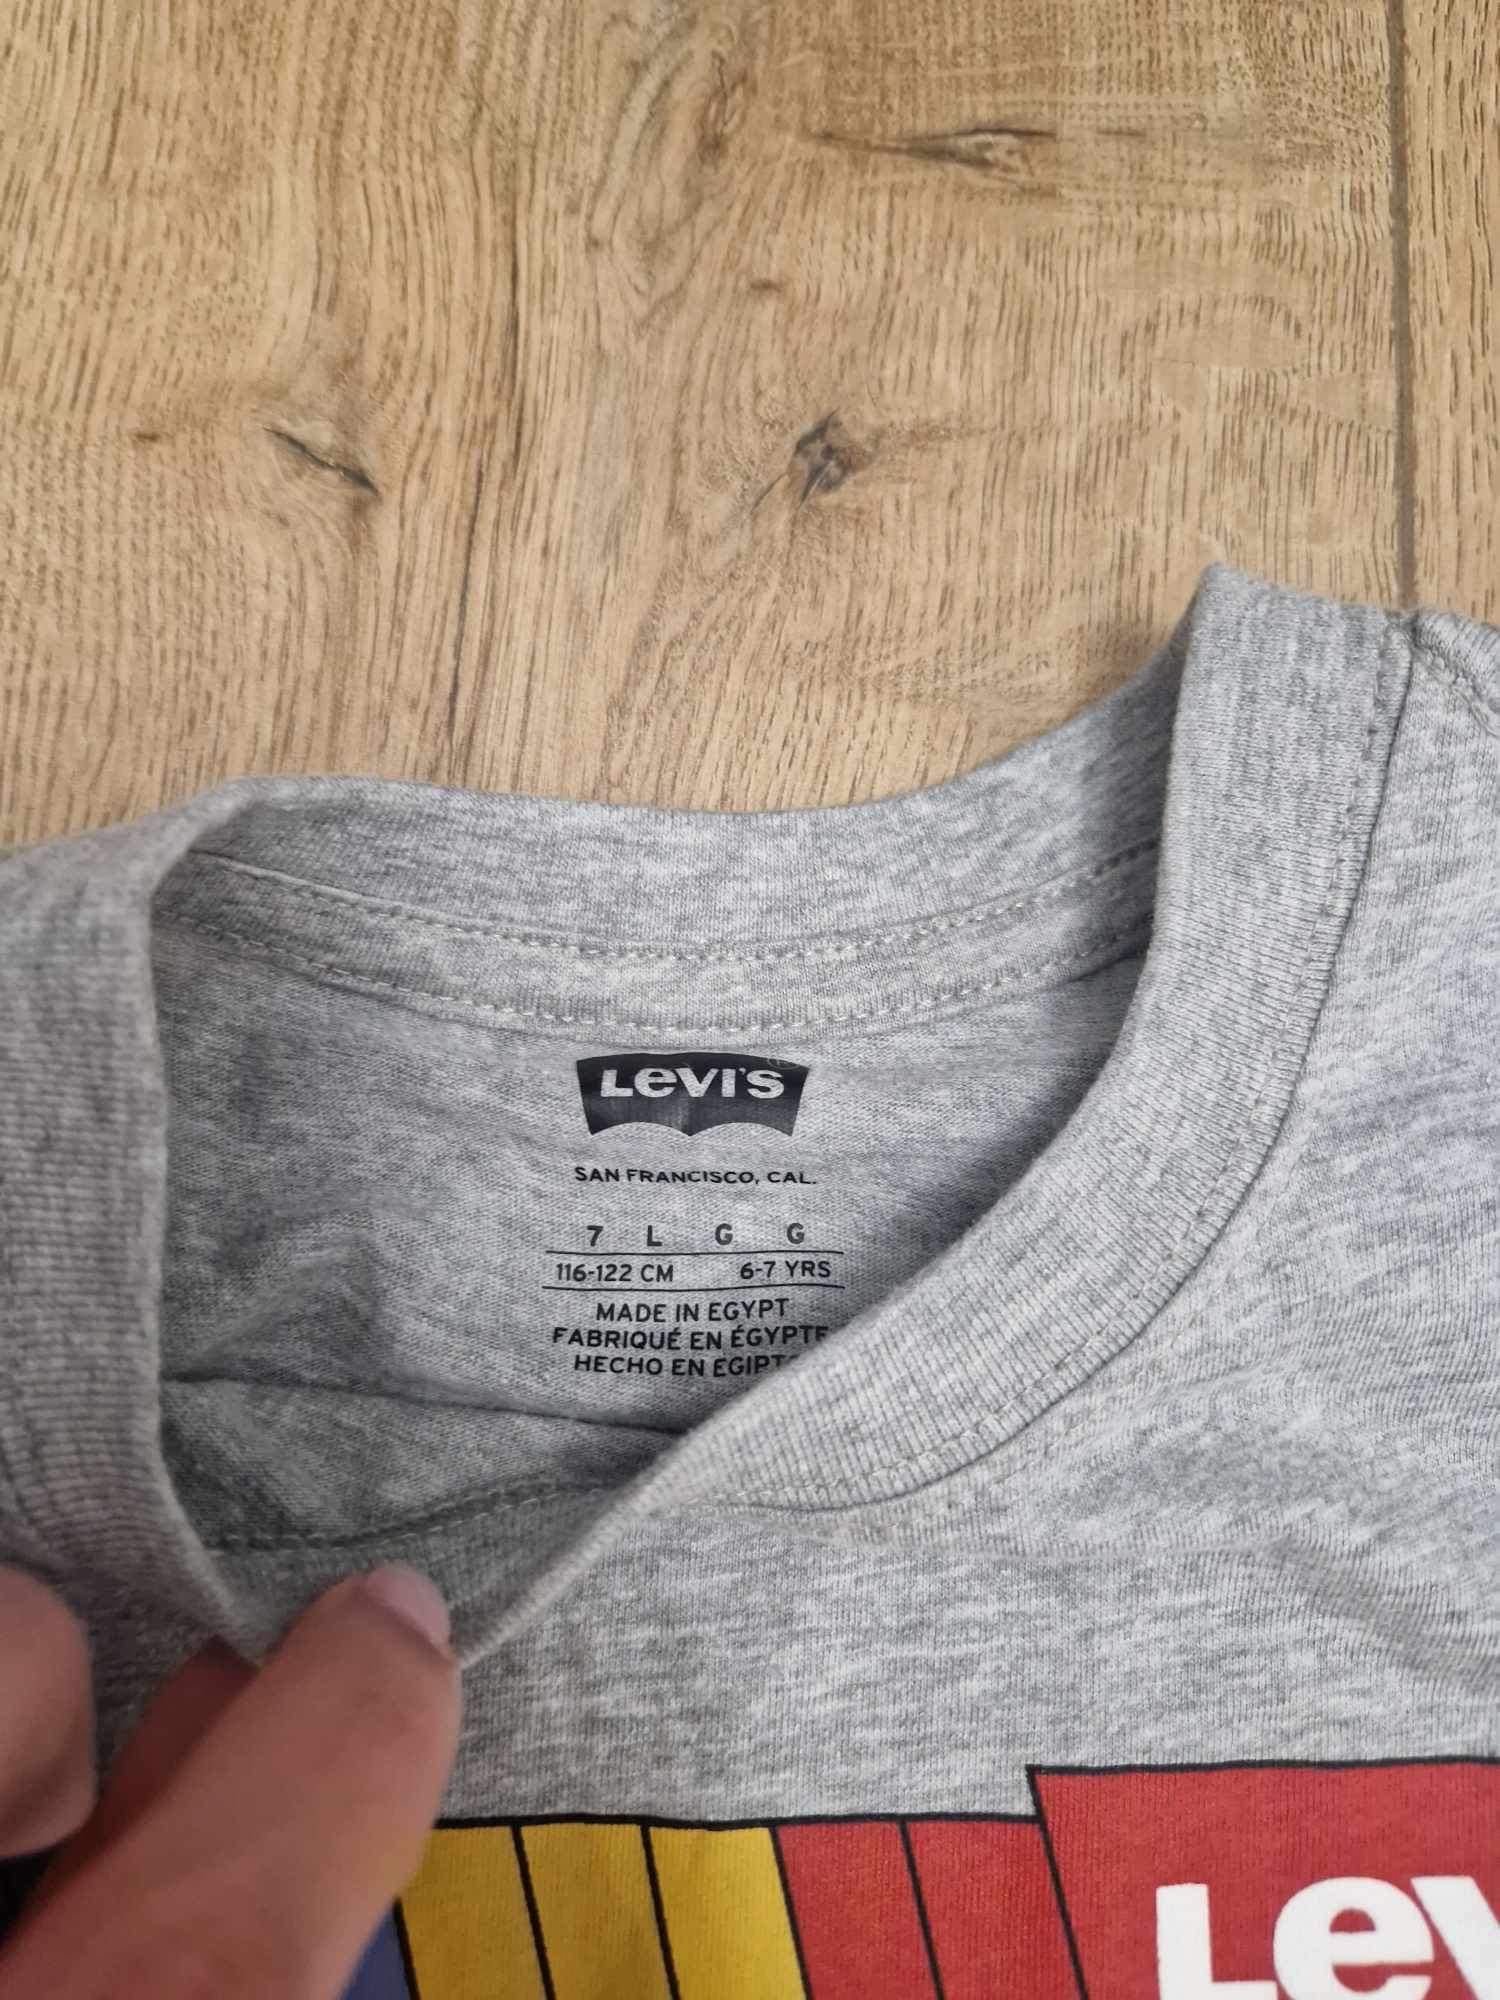 T shirt Levi’s nowy dla chlopca 116/122